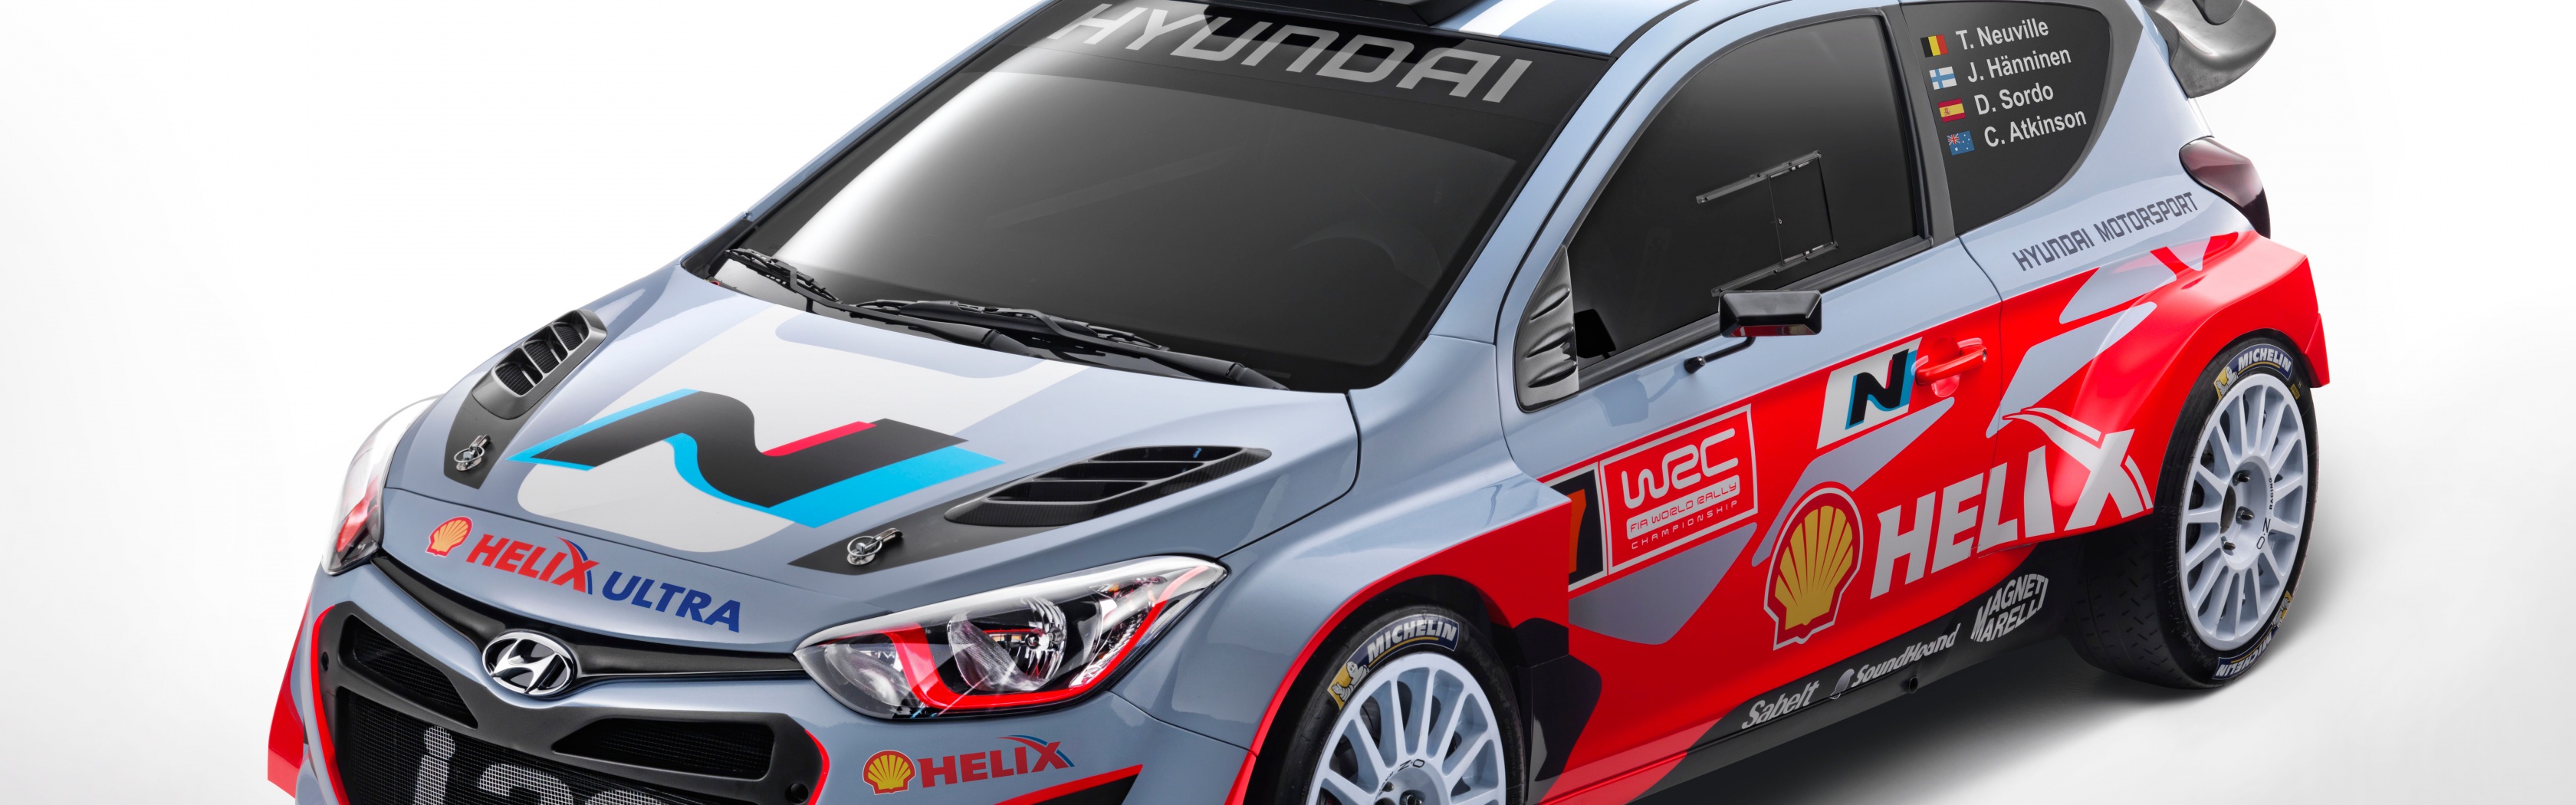 The Hyundai I20 - World Rally Car